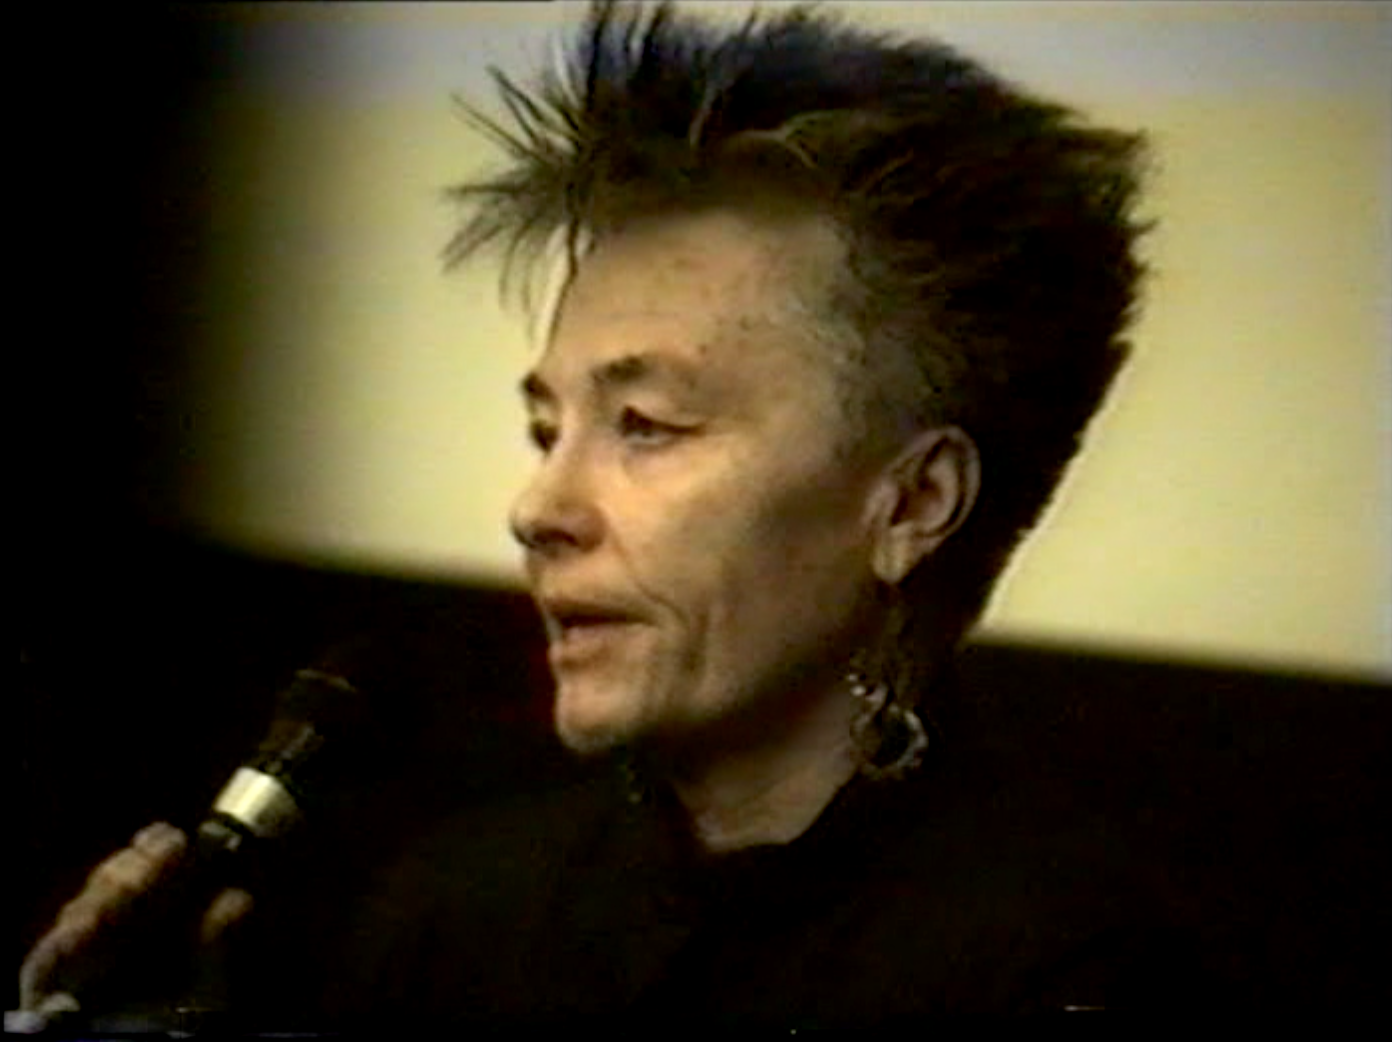 LTV Barbara Hammer (Berlinale, 1993). Provided by Mahide Lein